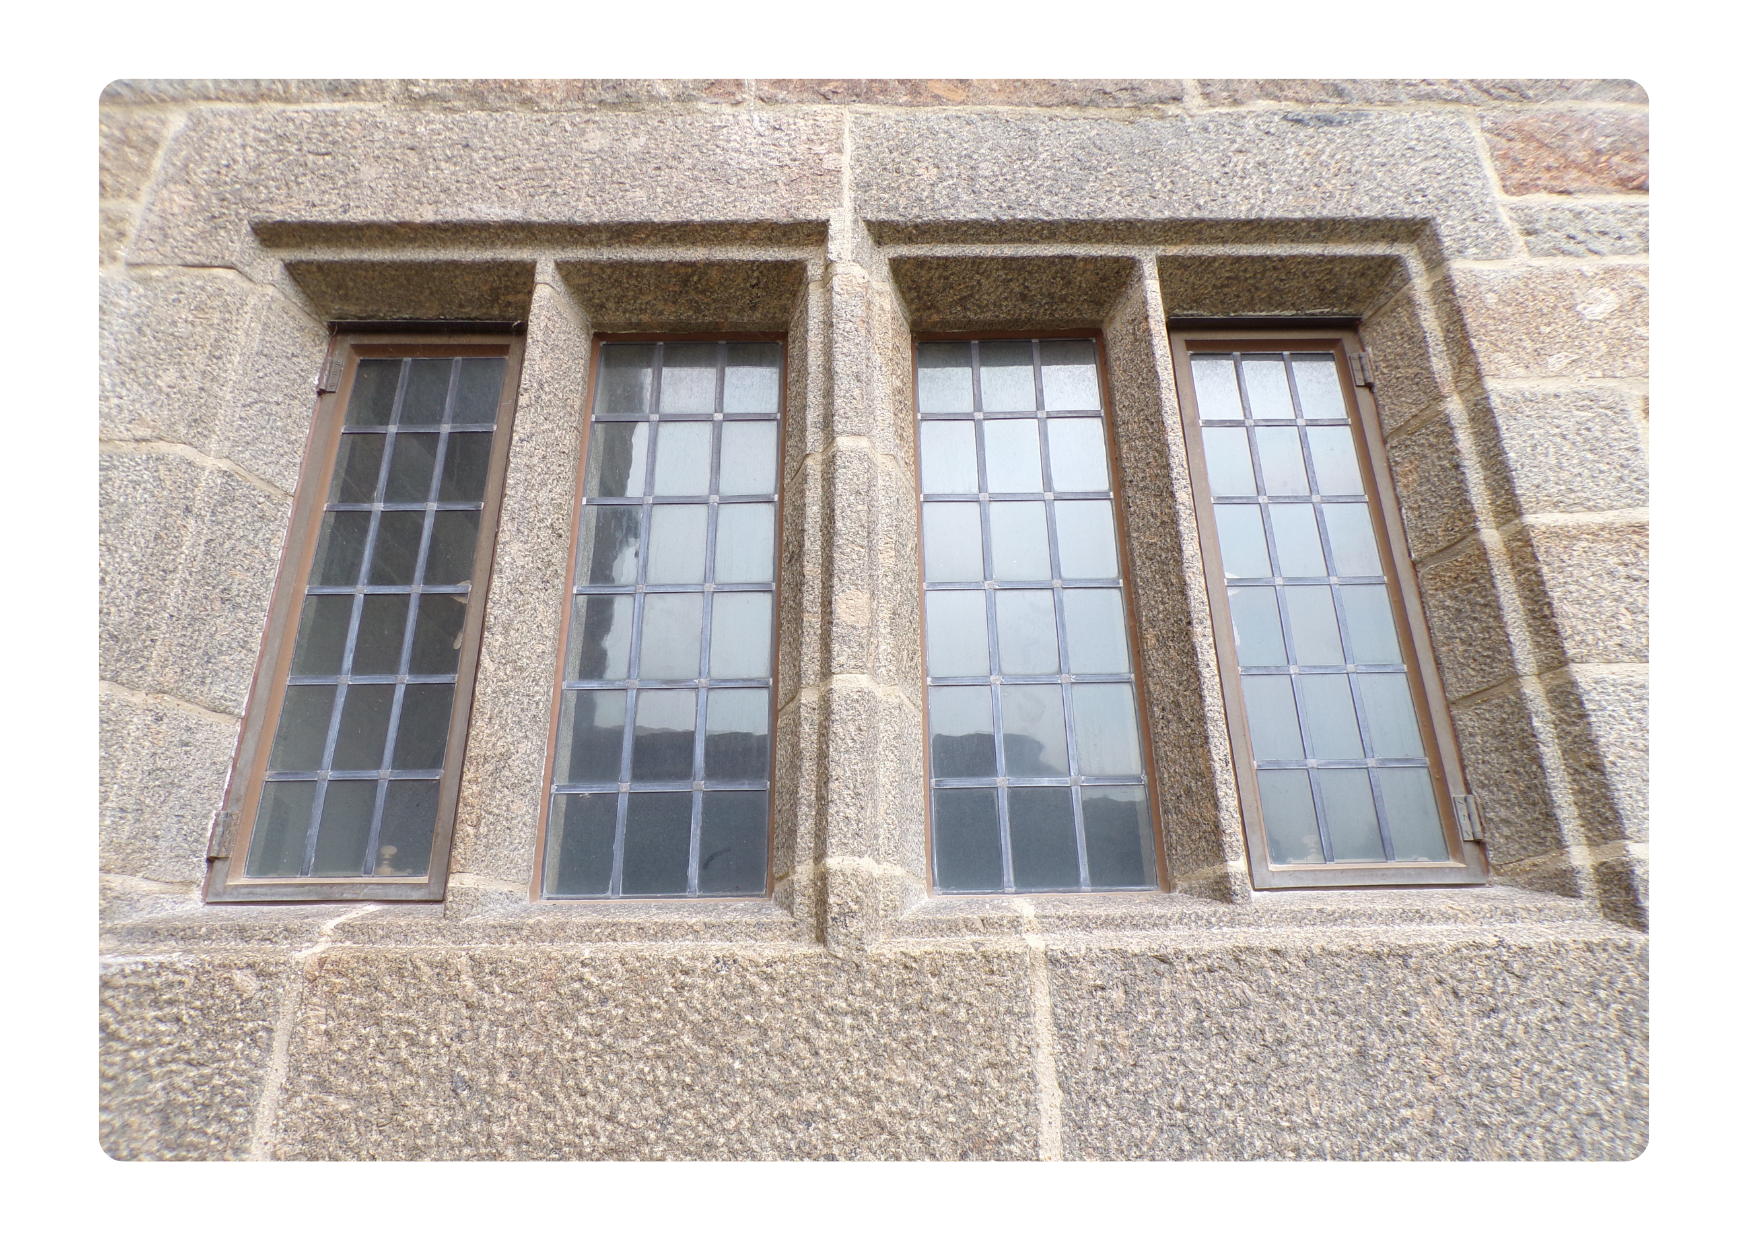 Castle Drogo windows